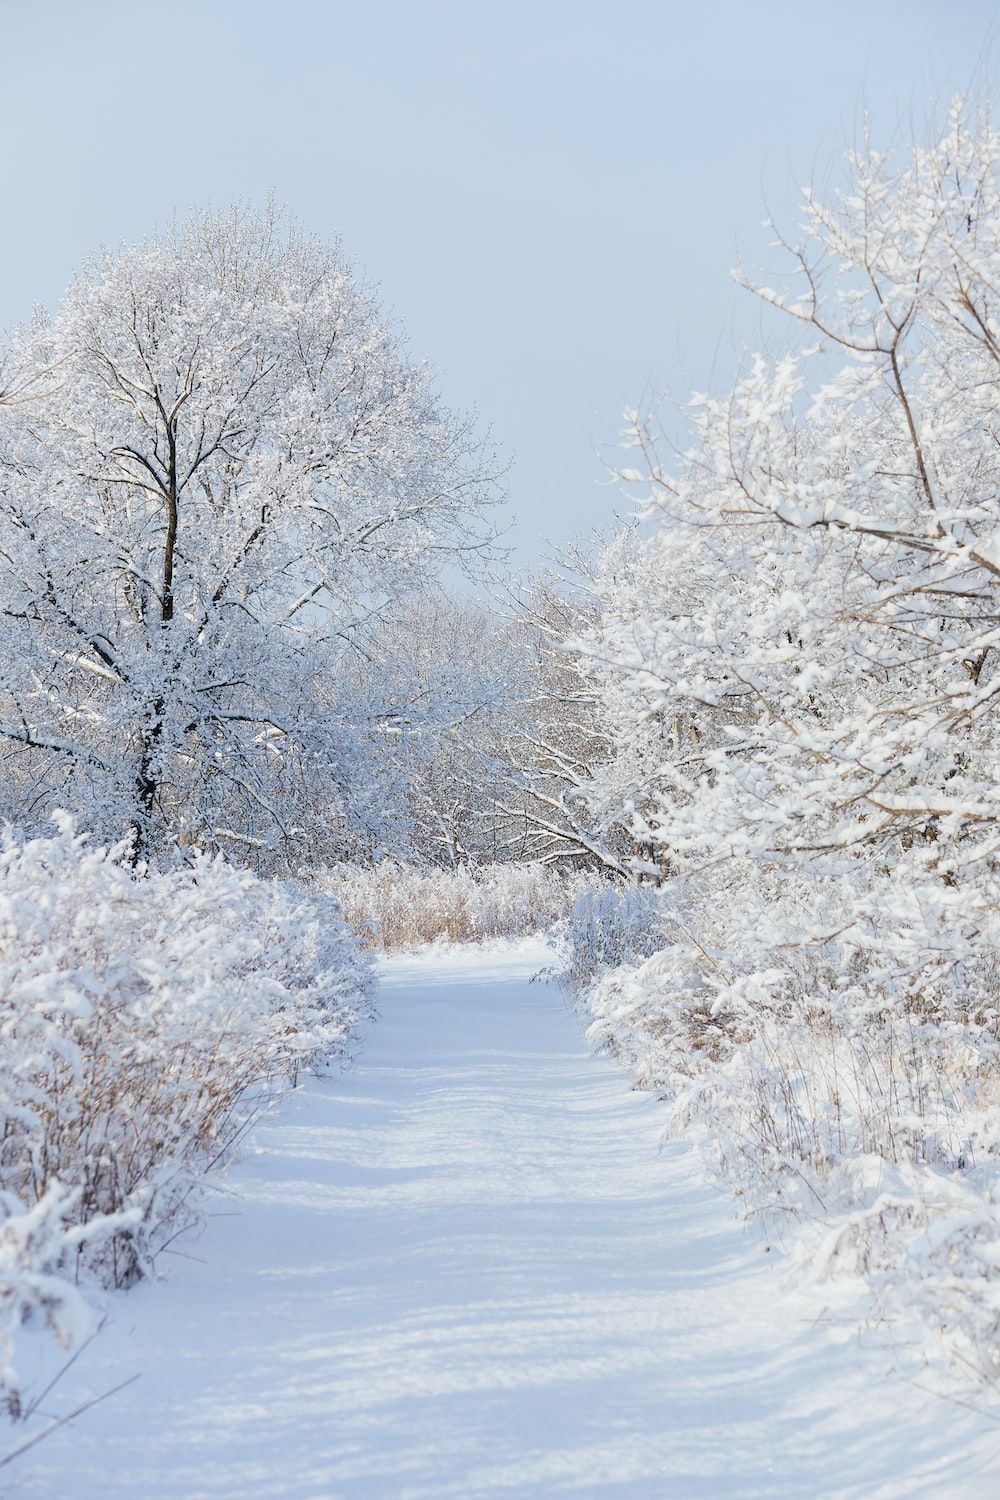 Winter Hintergrundbild 1000x1500. Aesthetic Winter Picture. Download Free Image